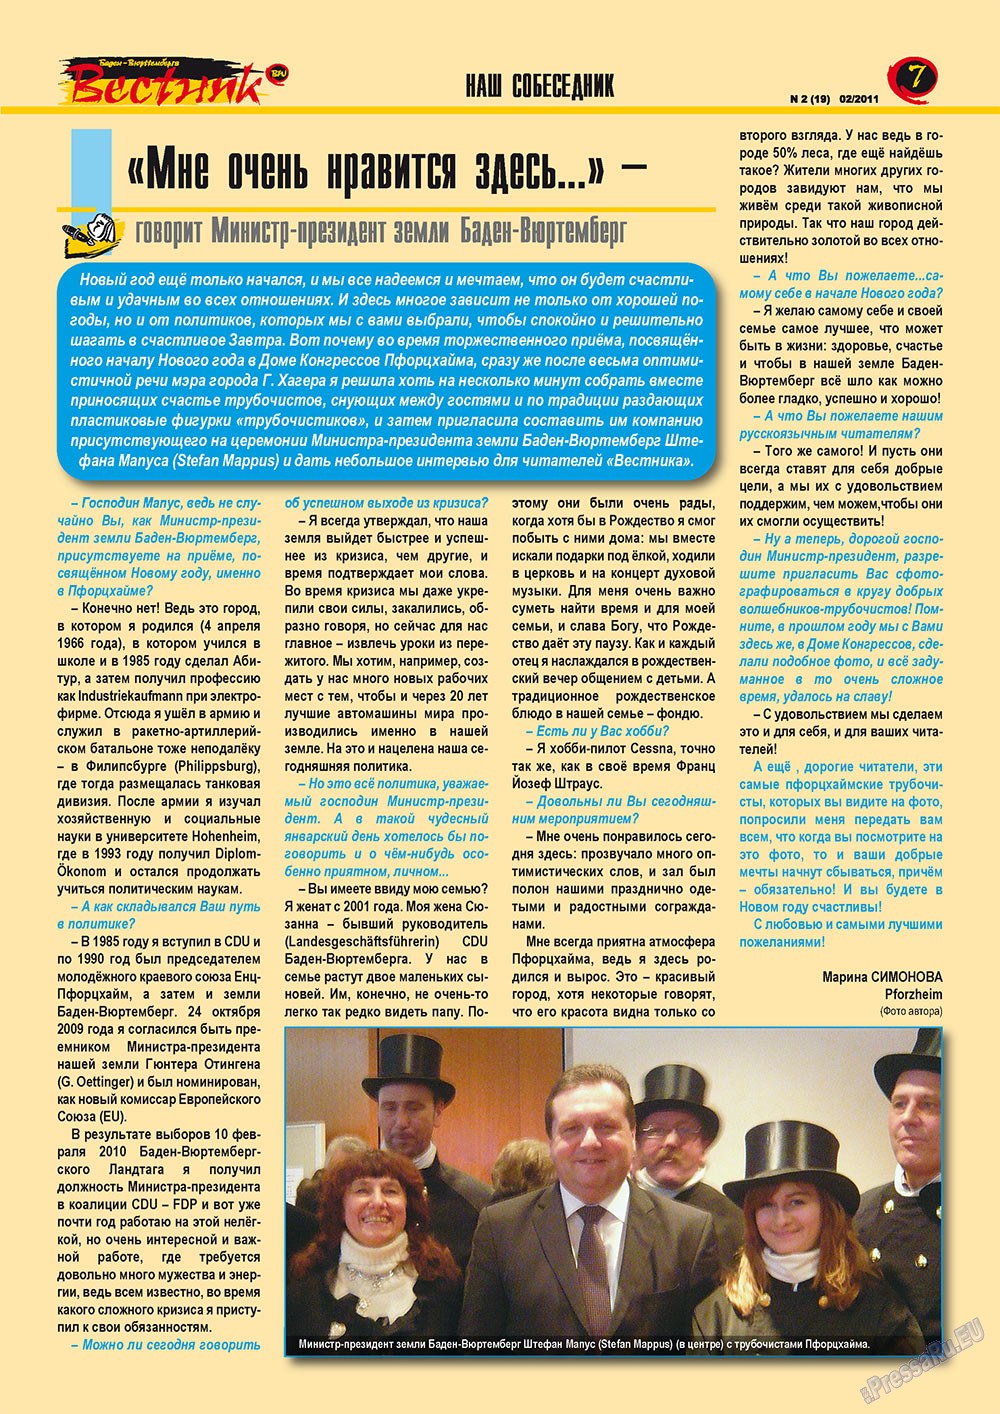 Вестник-info (журнал). 2011 год, номер 2, стр. 7